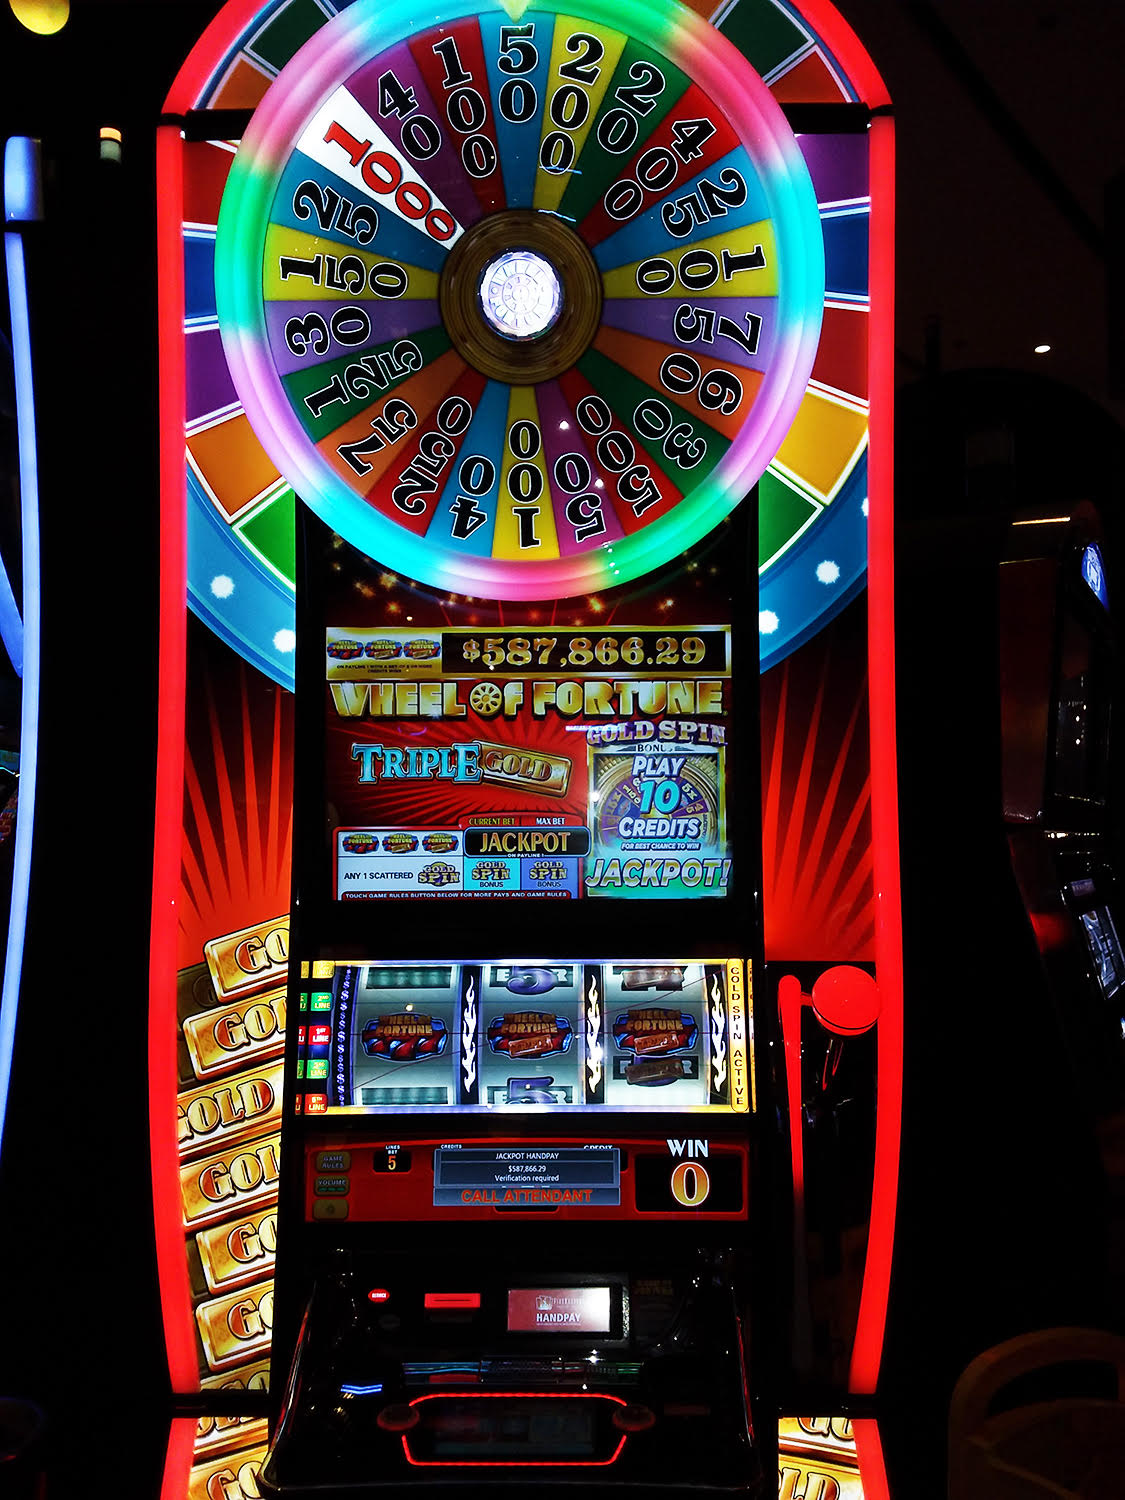 wheel of fortune slot winners